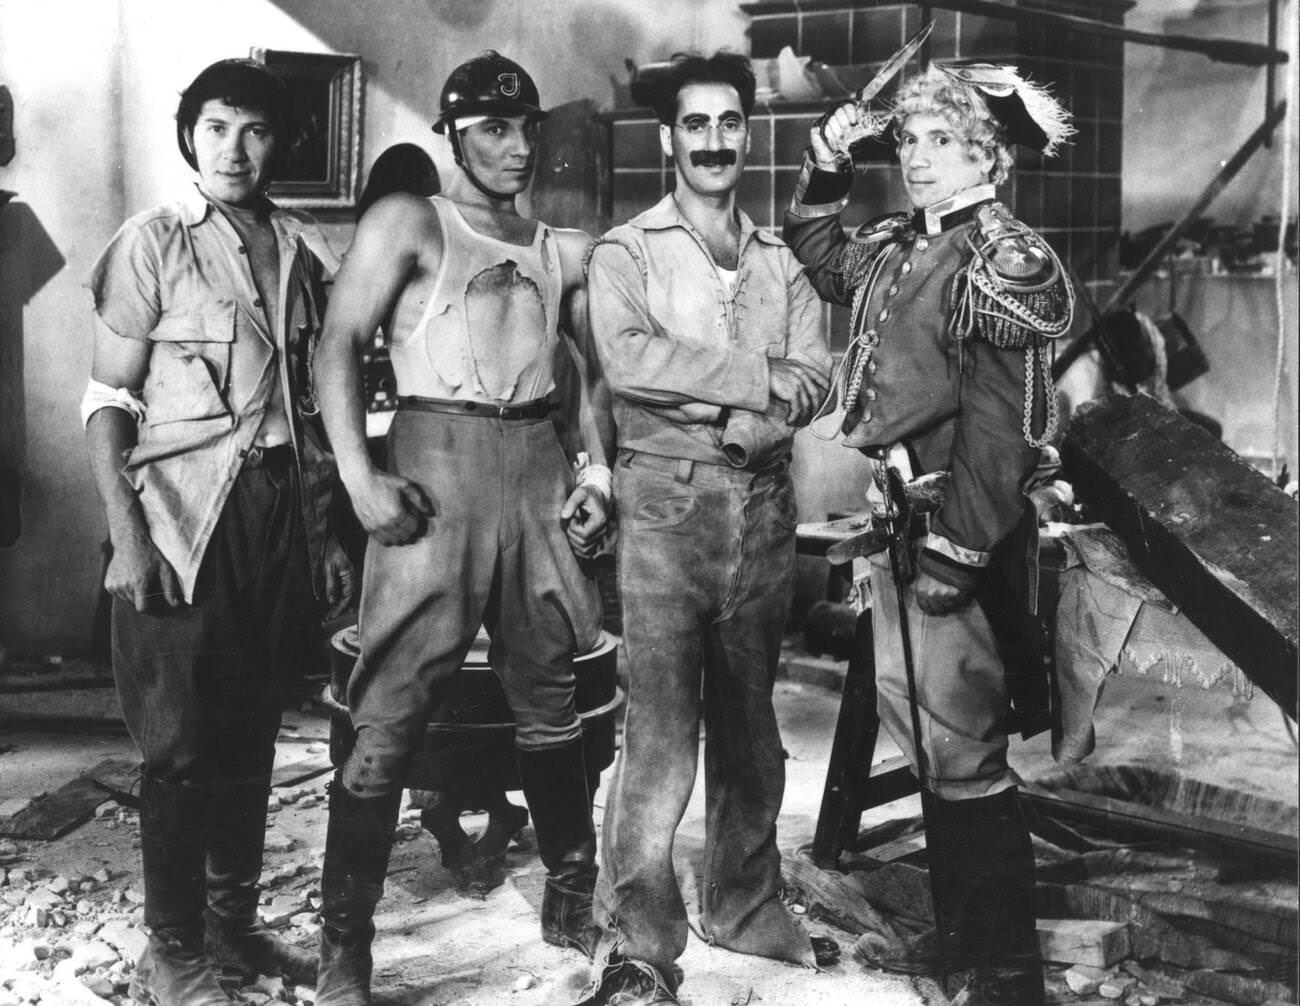 Duck Soup (1933) stars Groucho Marx, Zeppo Marx, Harpo Marx, and Chico Marx, directed by Leo McCarey.